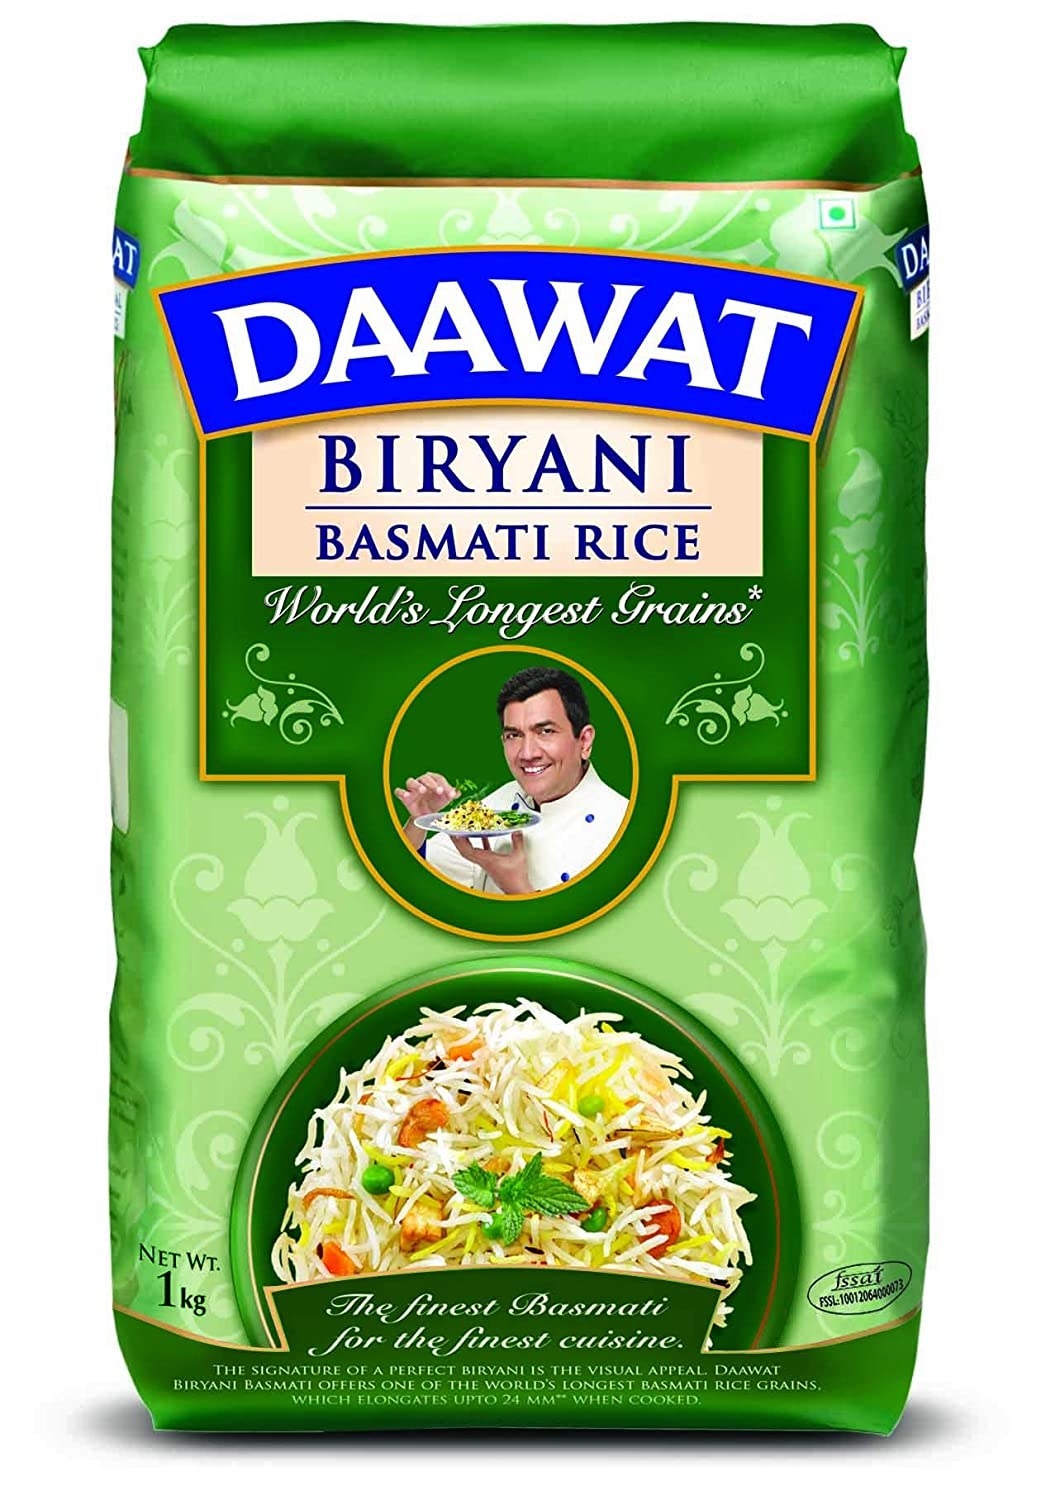 A packet of 1kg Biryani Basmati Rice.